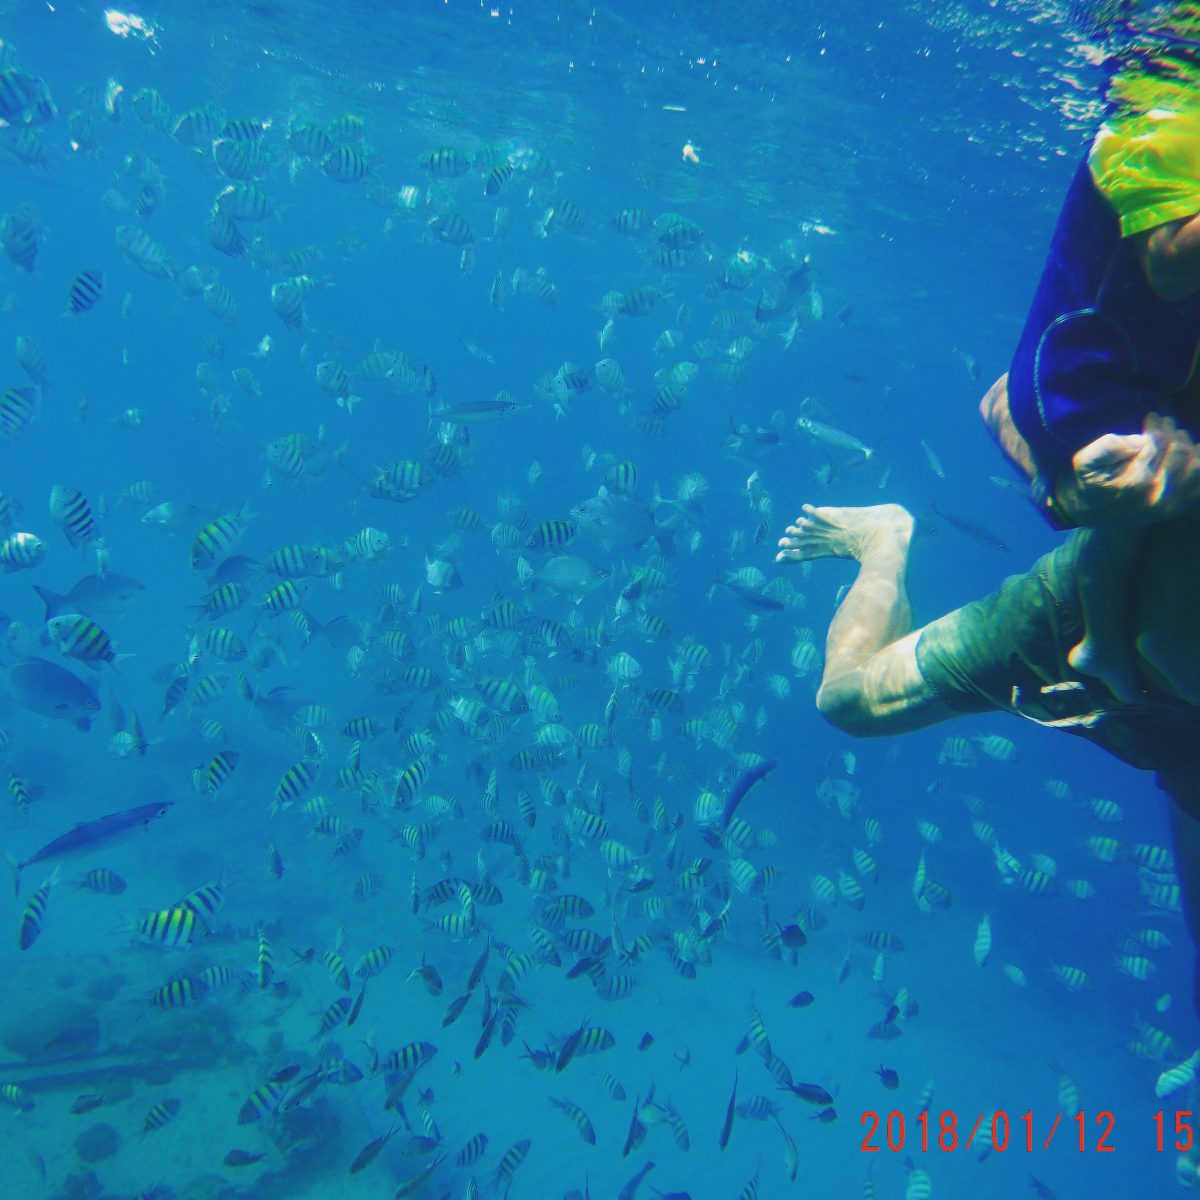 Barbados Snorkeling with fish and shipwrecks